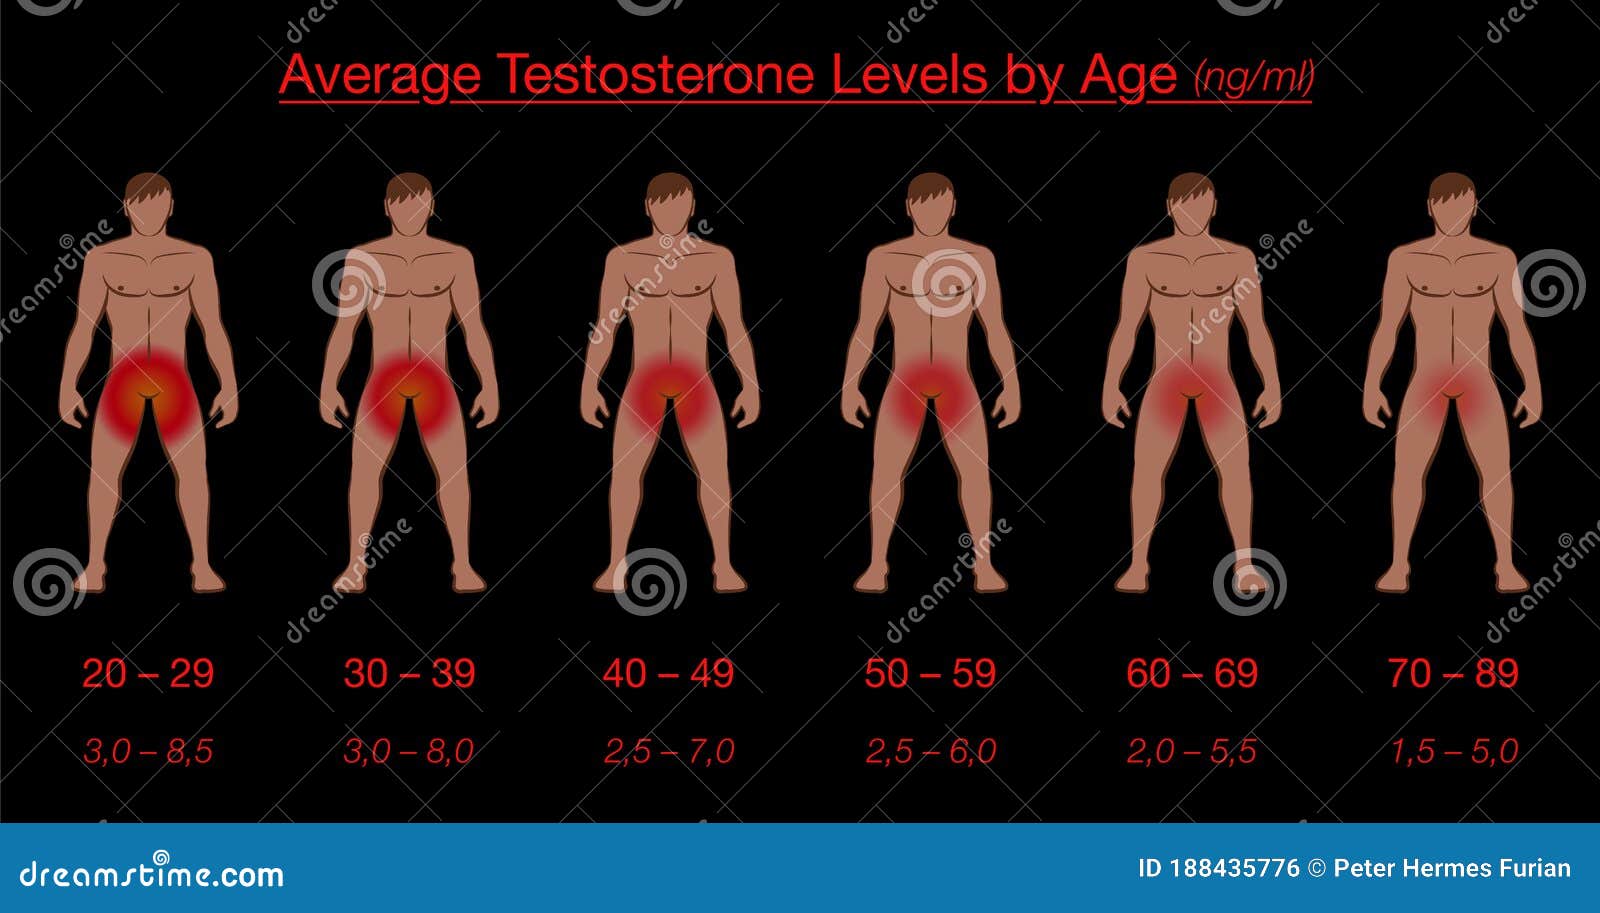 как тестостерон влияет на размер члена фото 4